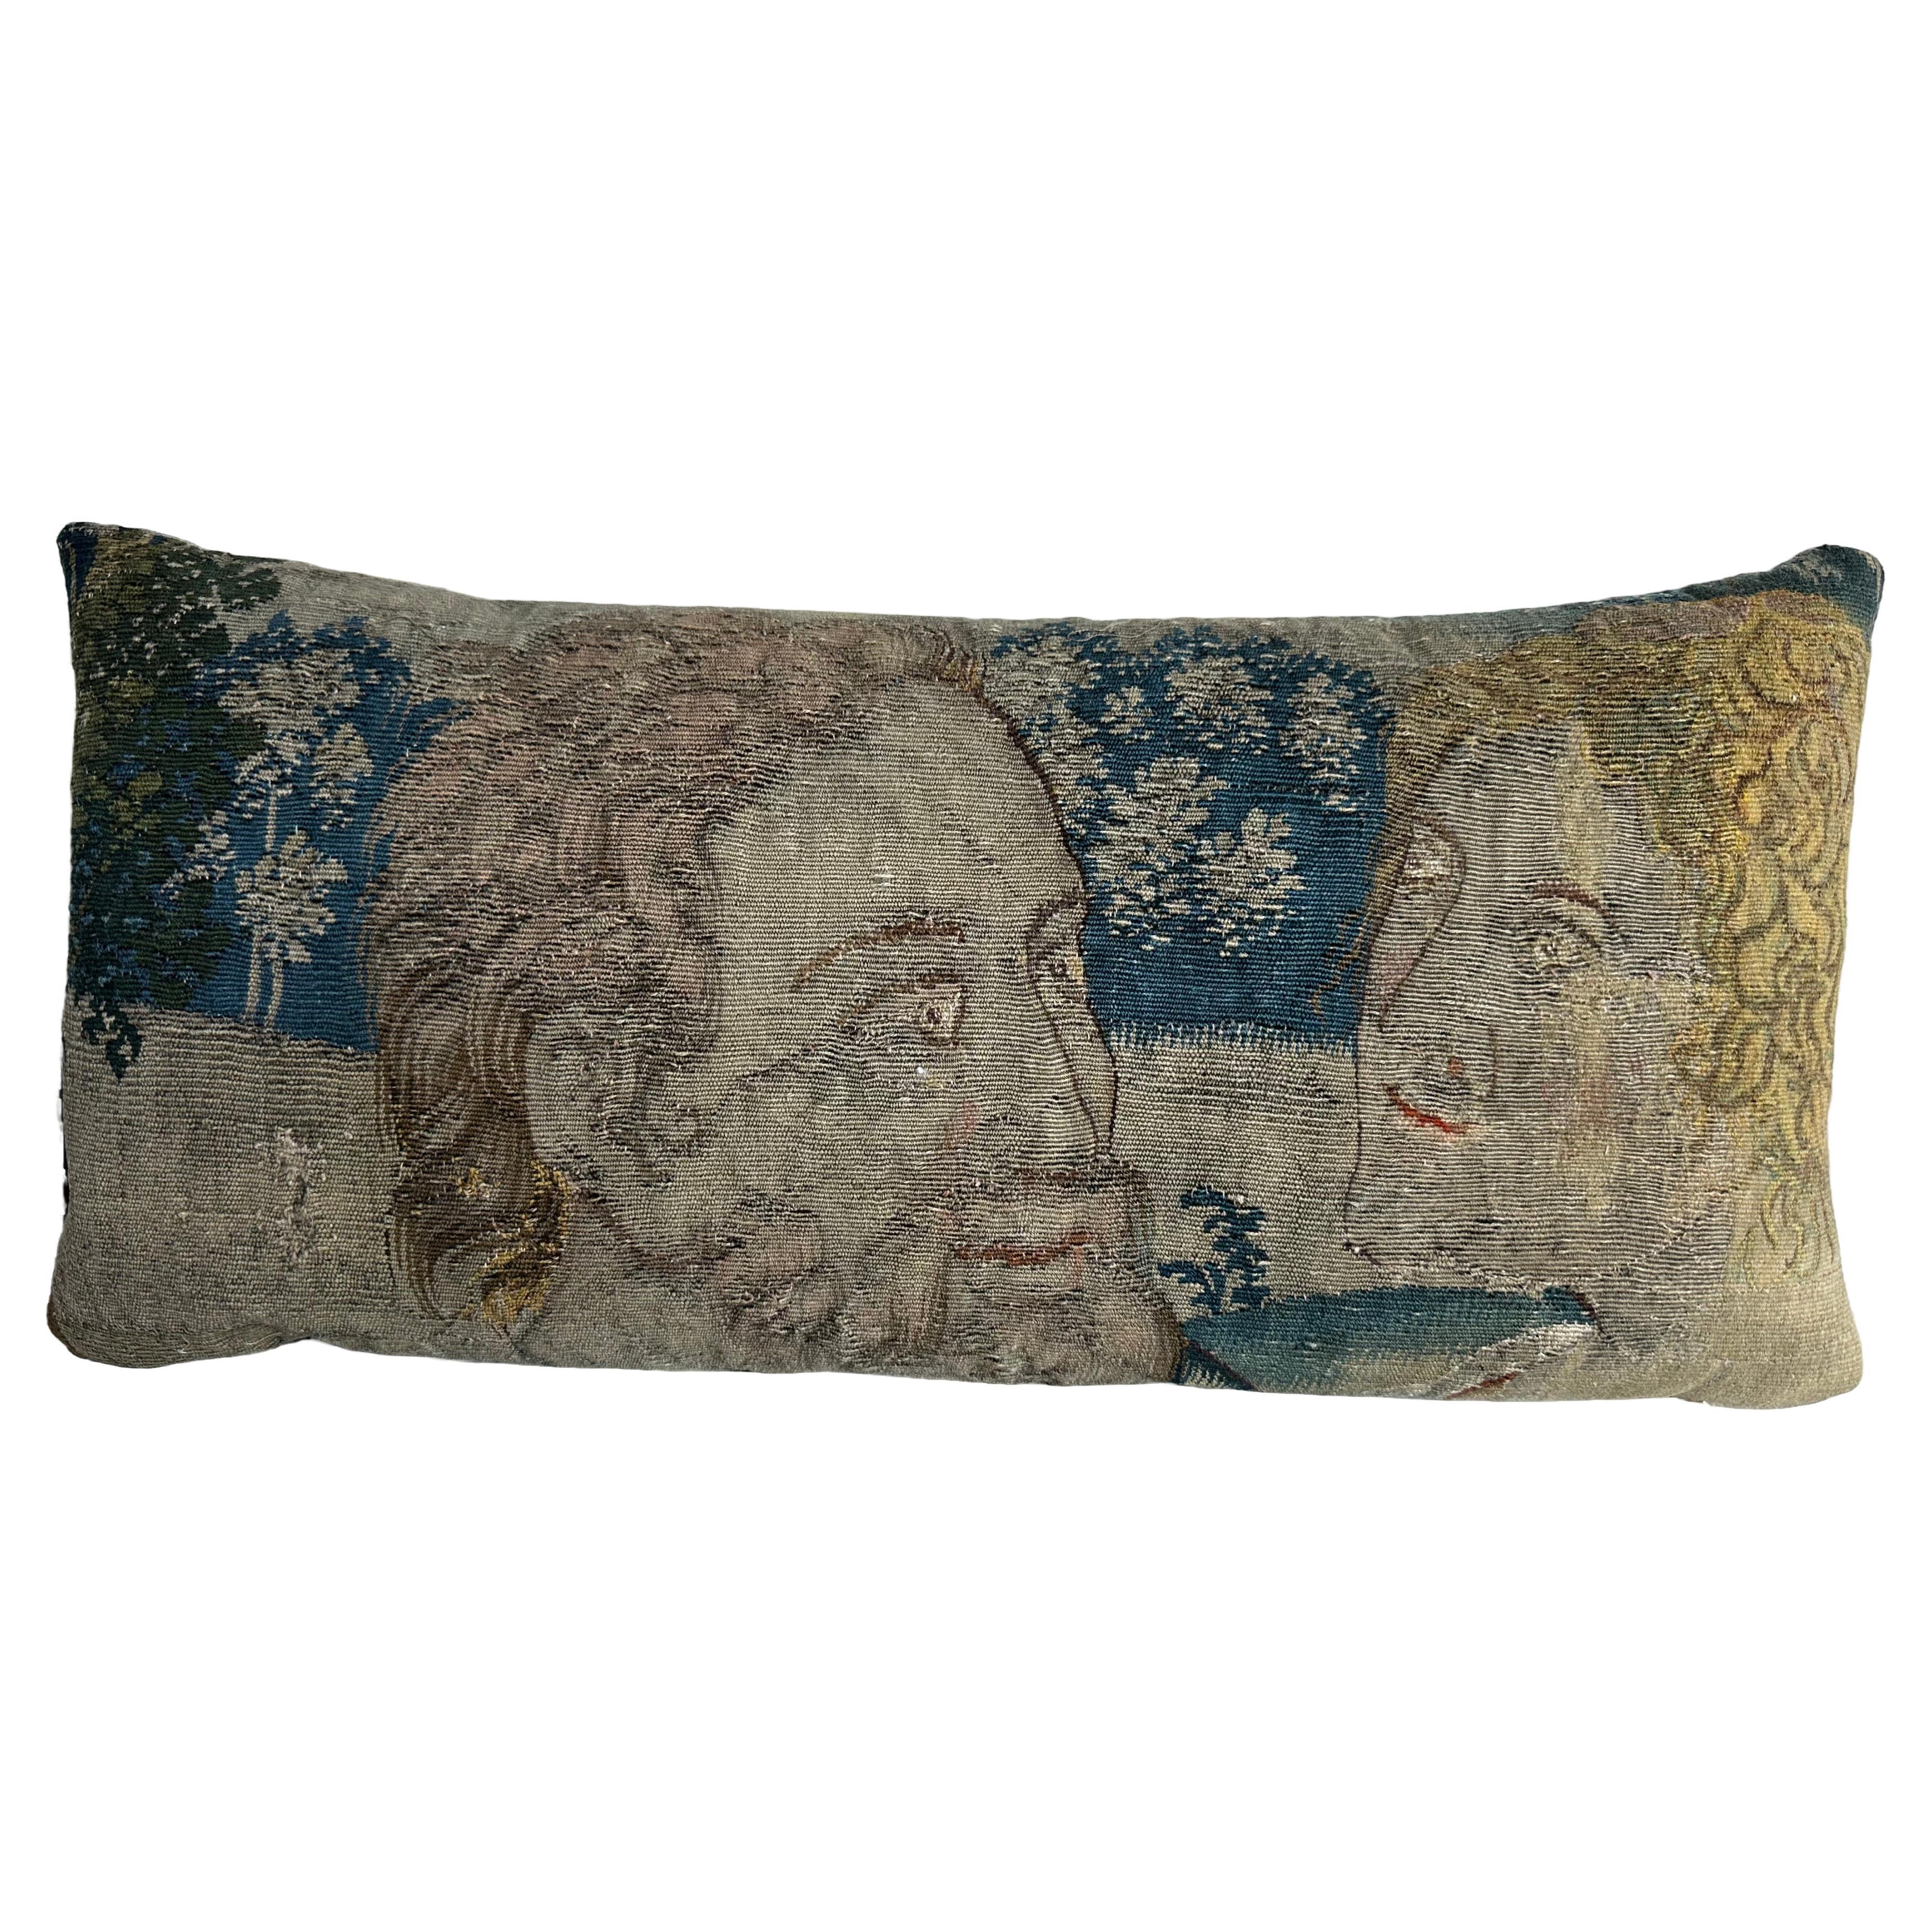 Brussel 16th Century Pillow - 24" X 12"